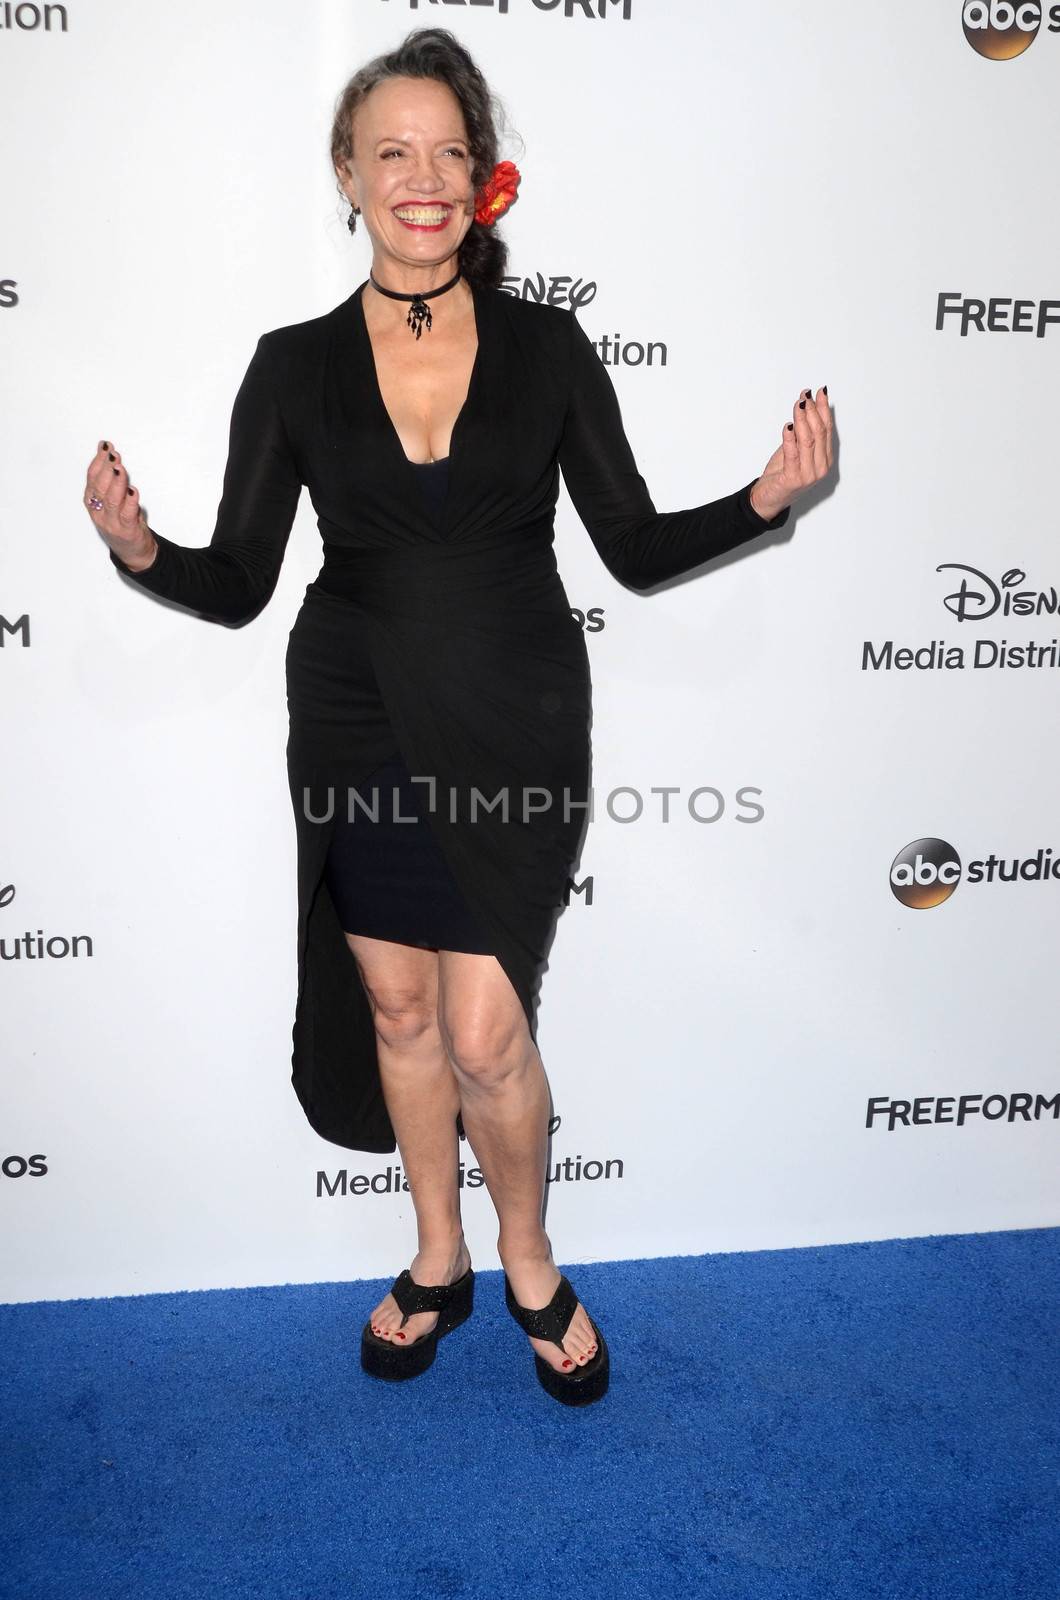 Rena Owen
at the 2017 ABC International Upfronts, Disney Studios, Burbank, CA 05-21-17/ImageCollect by ImageCollect